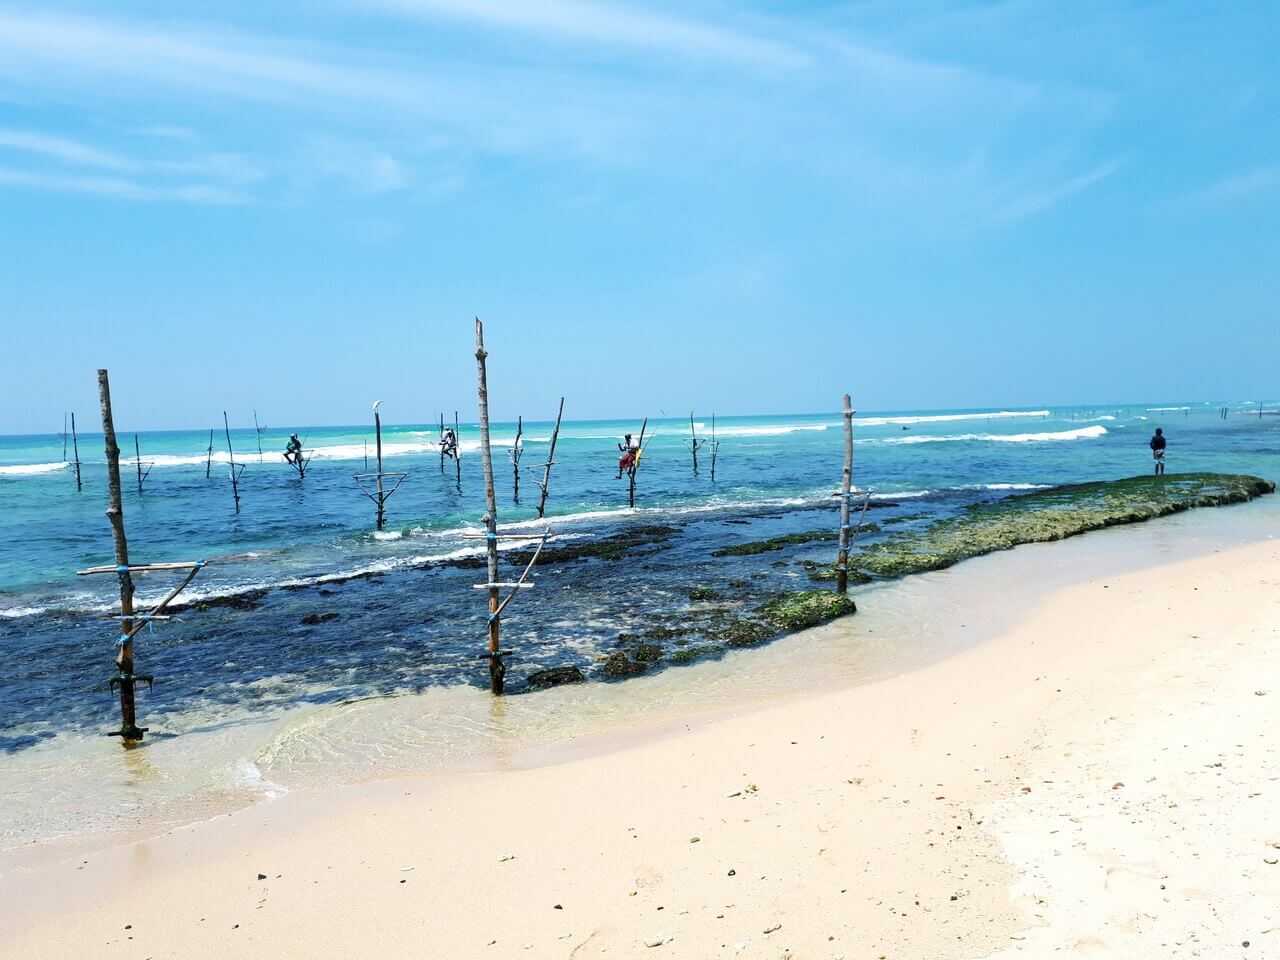 Stilt fishing, Sri Lanka